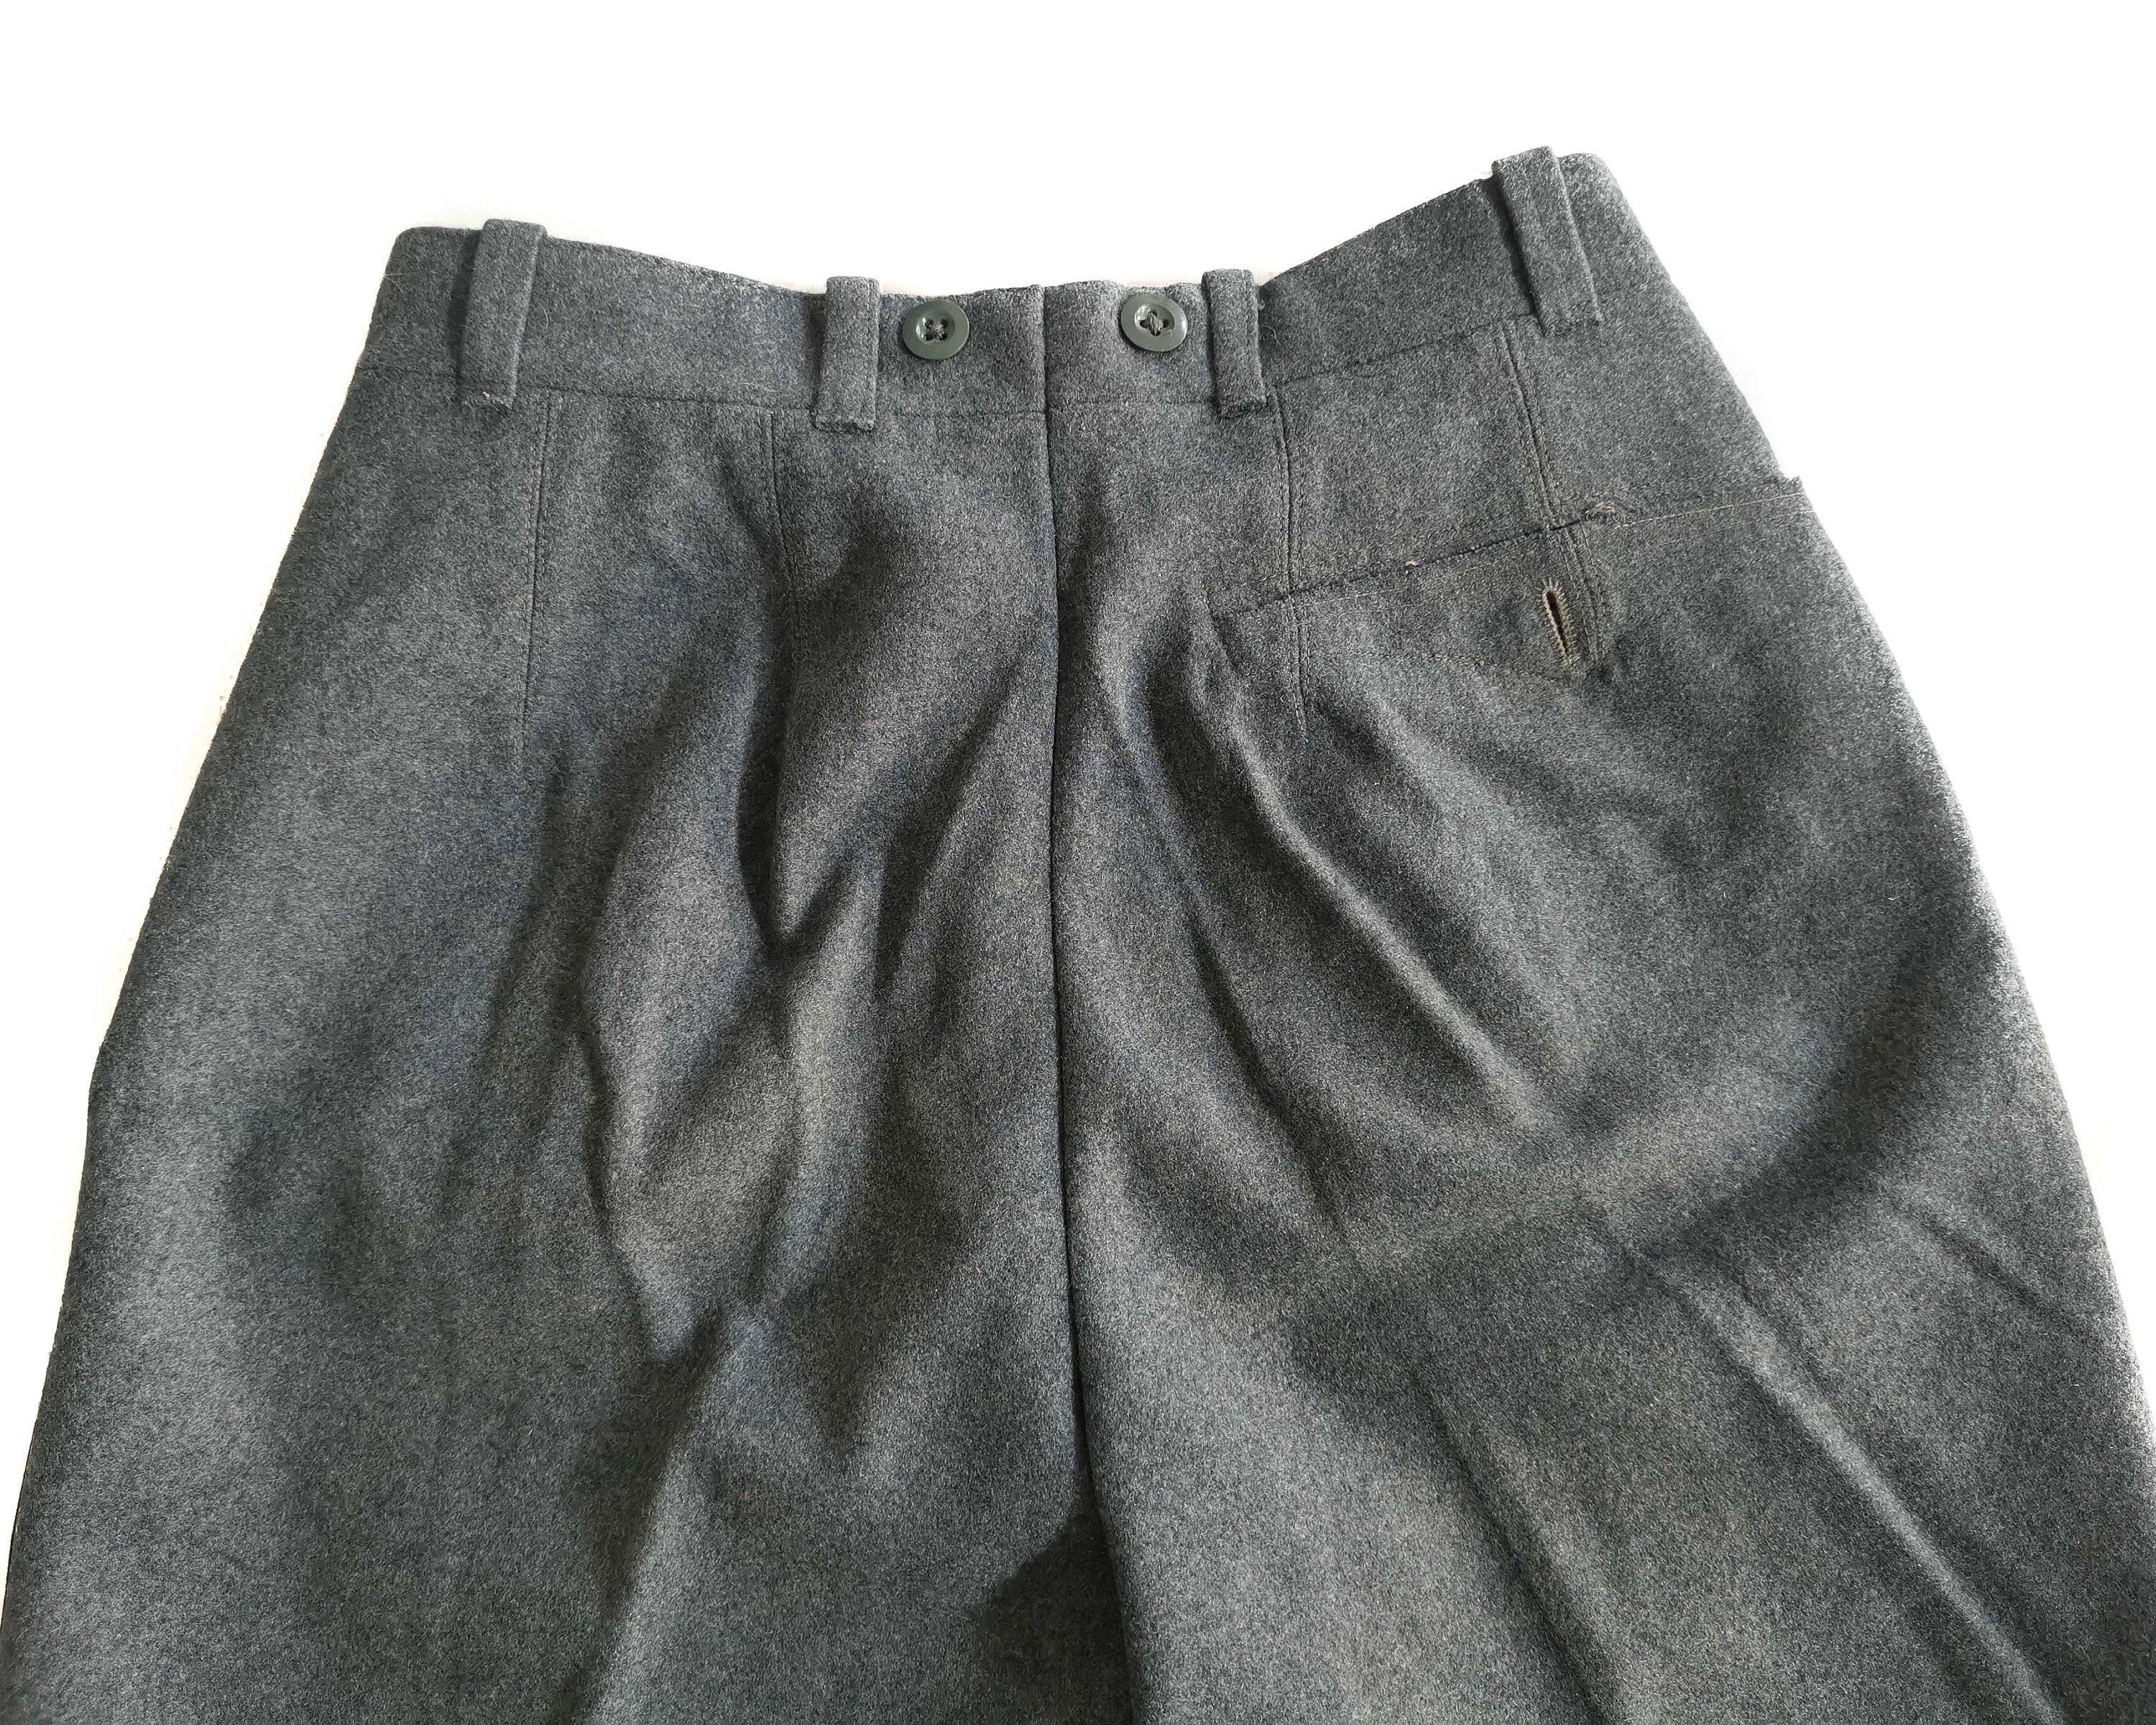 Original Swiss Army Wool Pants Military Surplus Field Trousers | Etsy UK